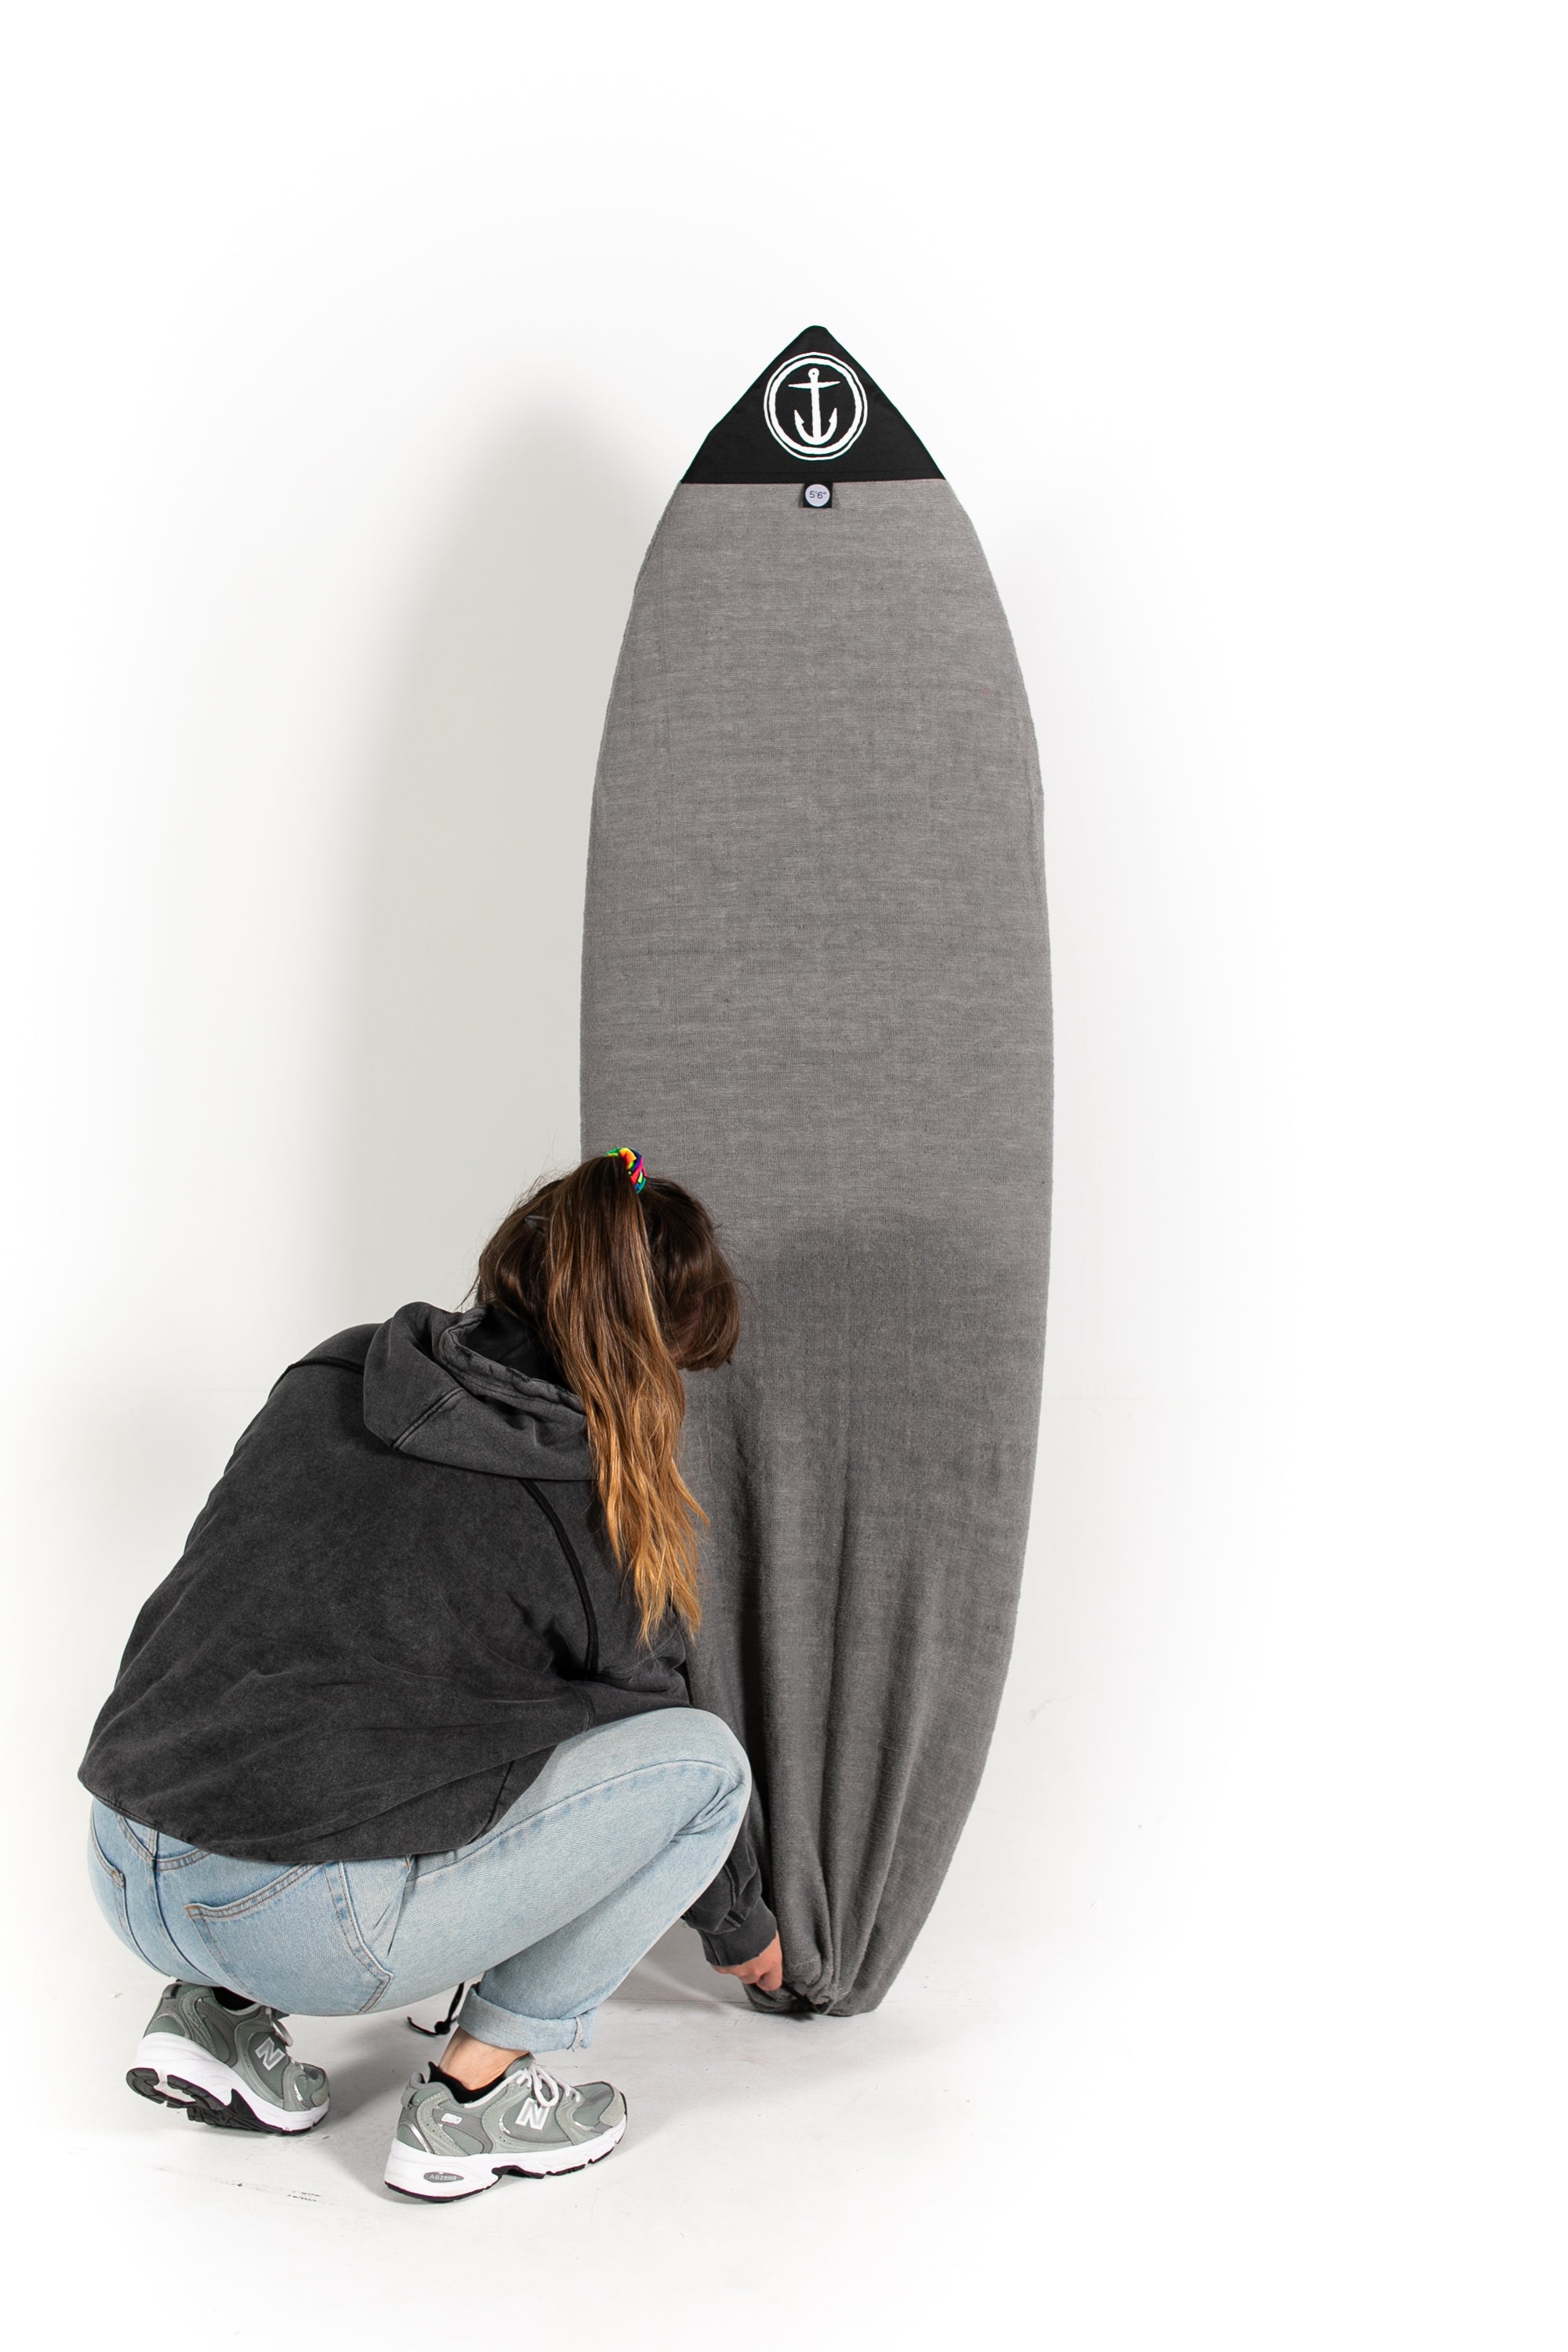 Pukas Surf Shop - Captain Fin Boardbags